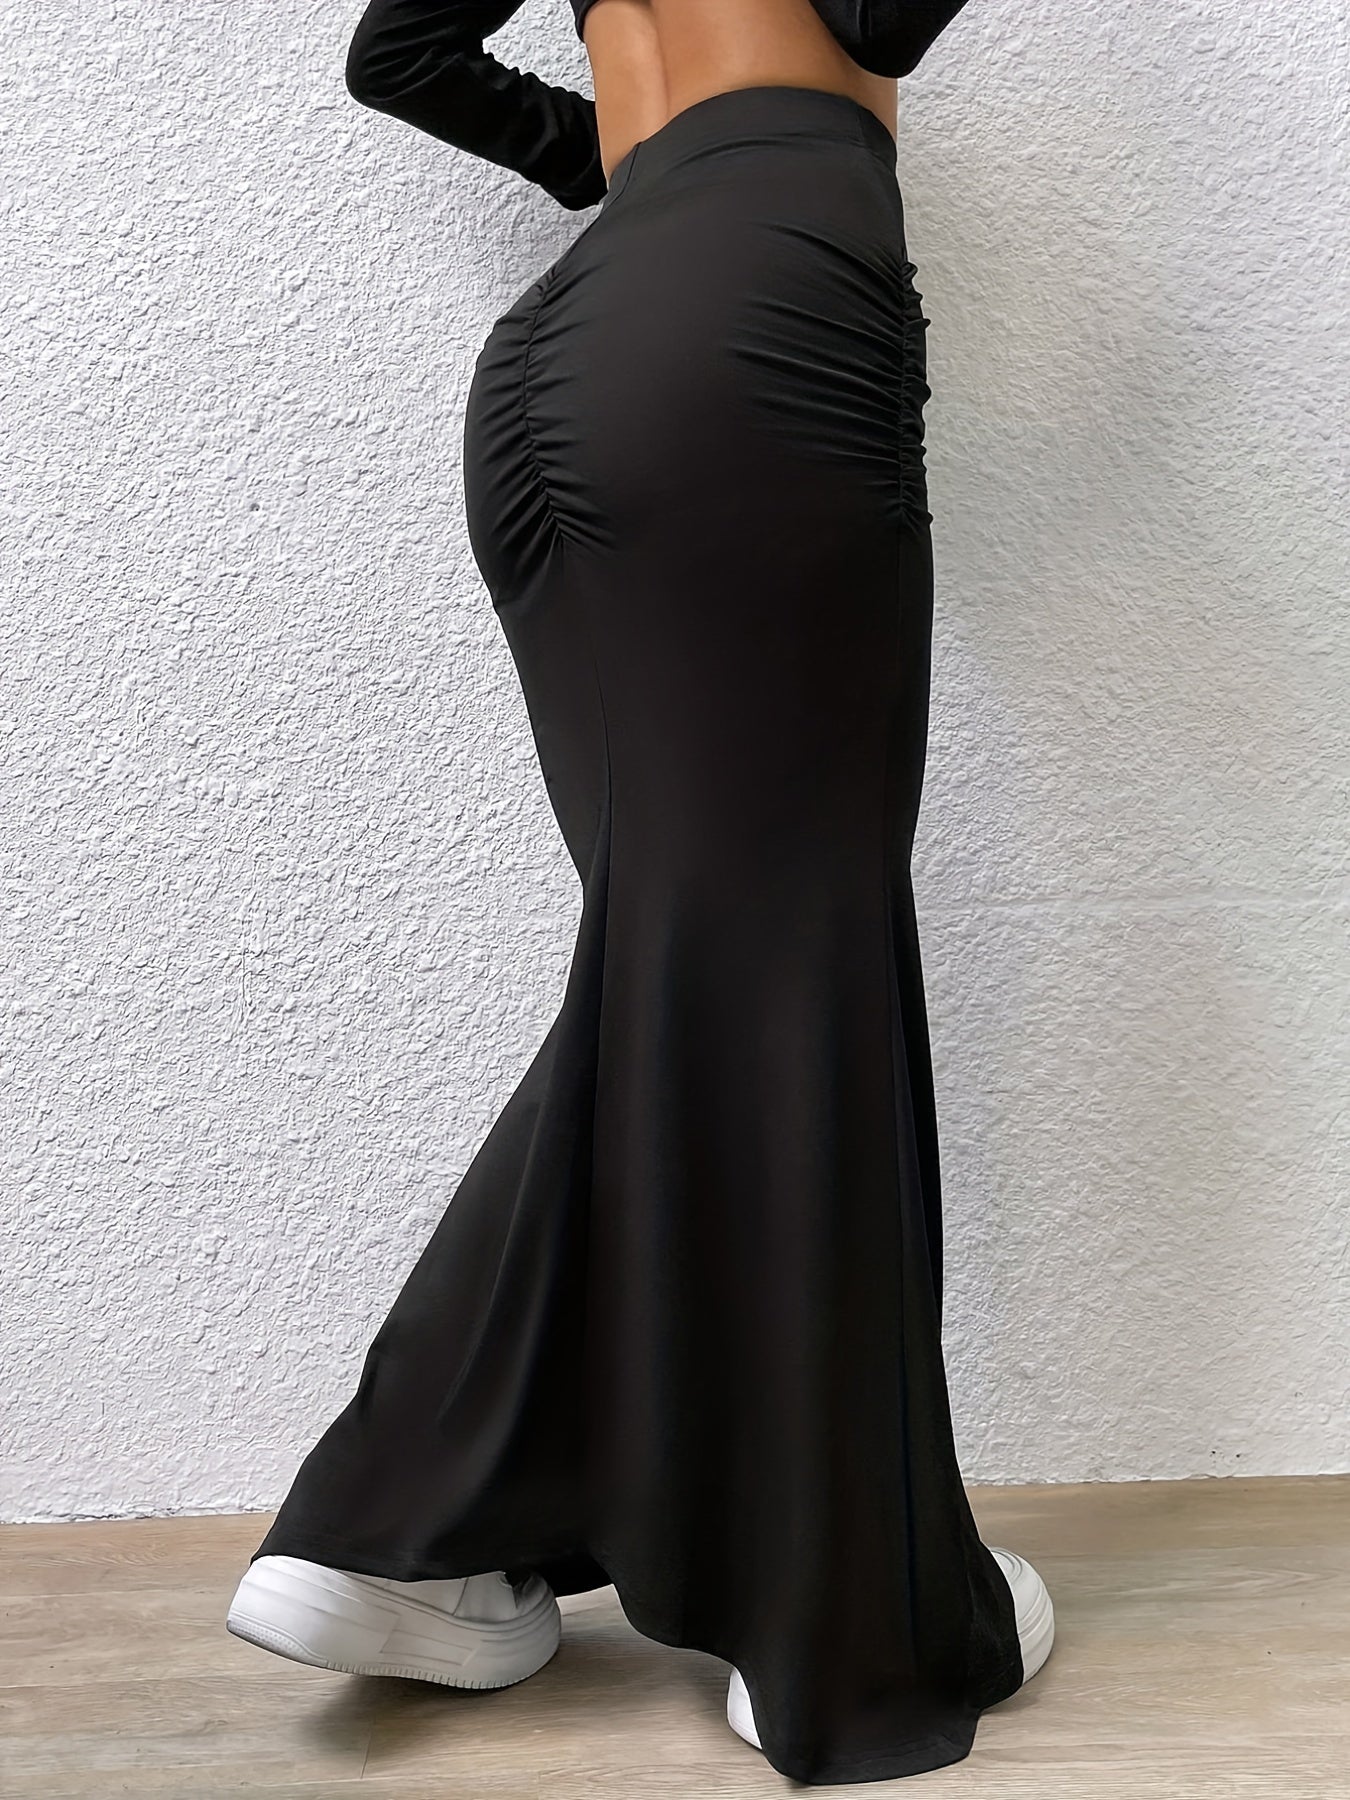 Solid Ruched High Waist Skirt, Elegant Slim Bodycon Skirt For Spring & Fall, Women's Clothing